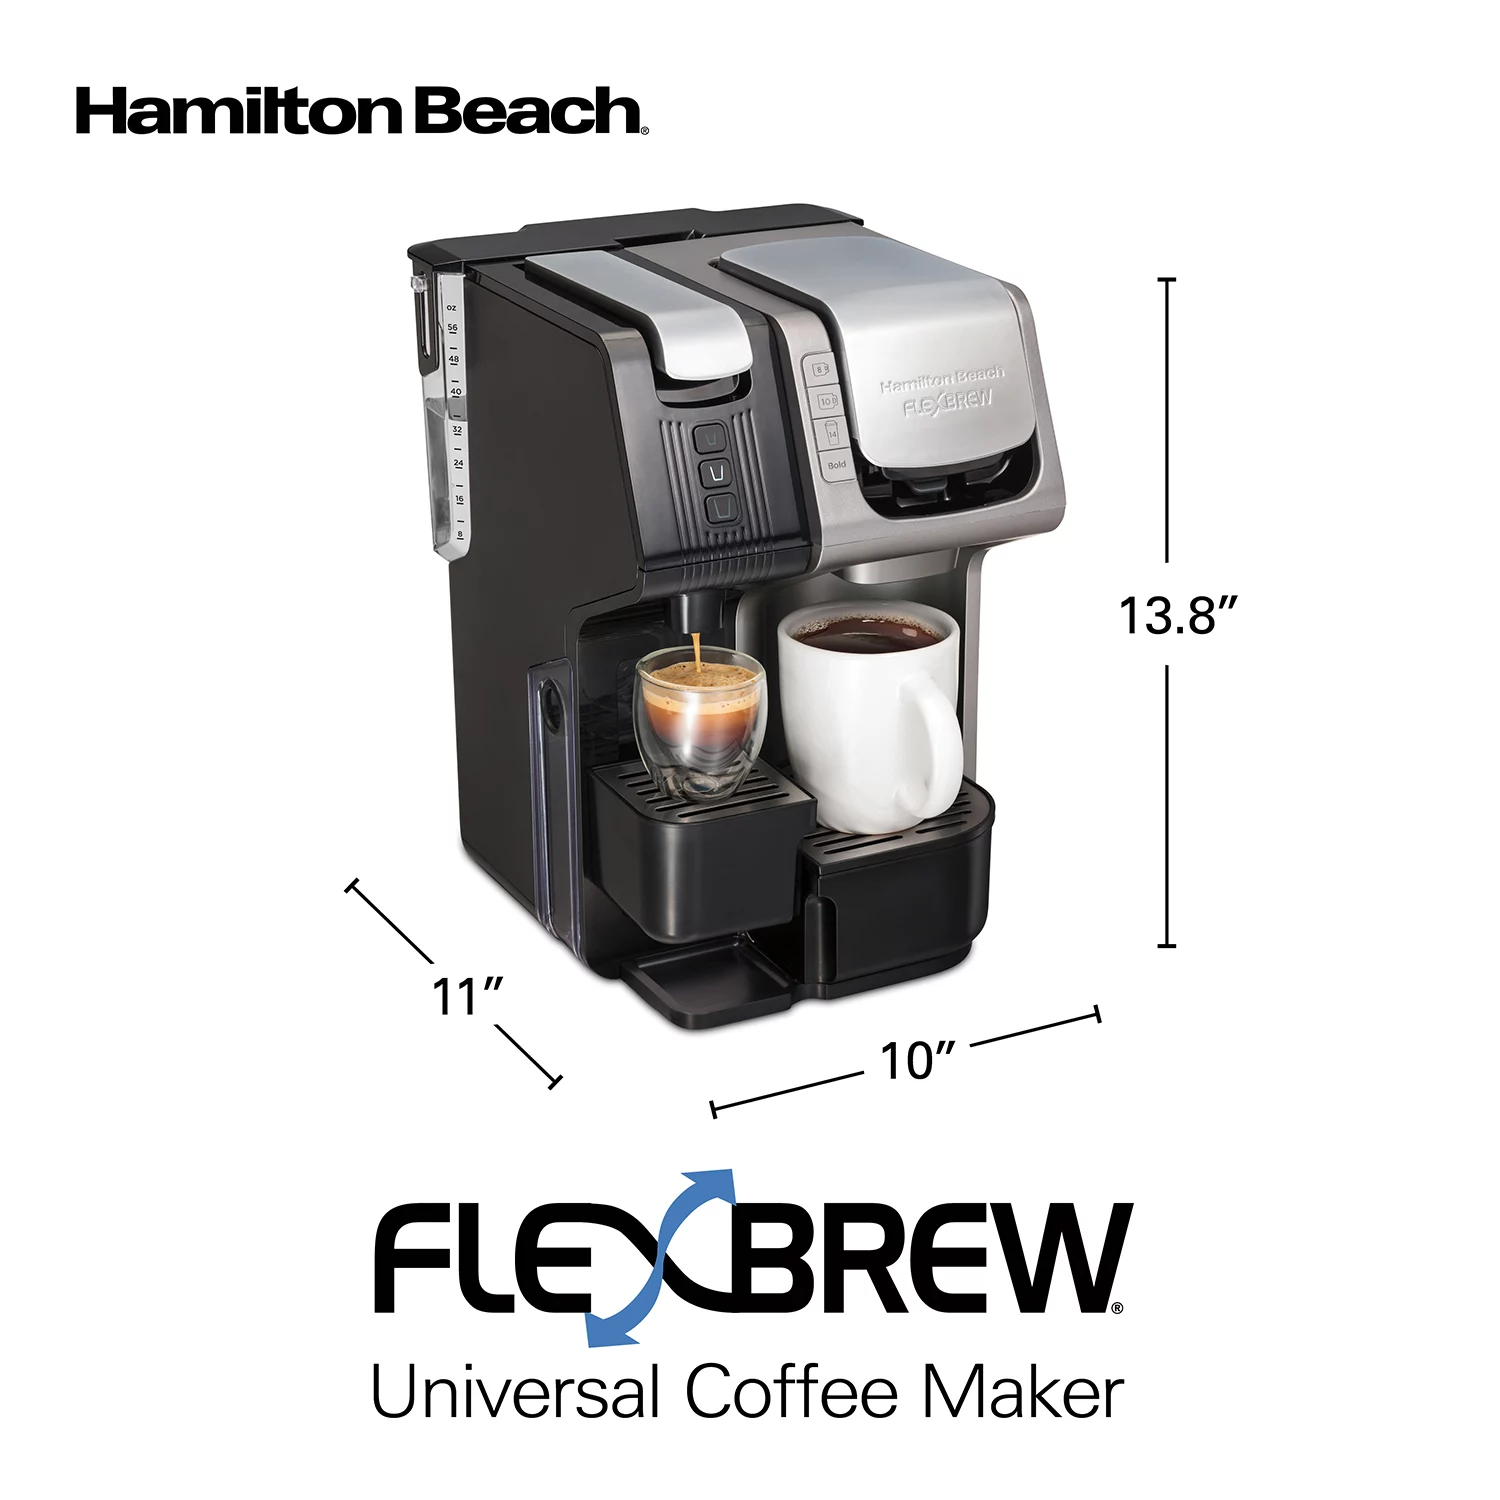  Hamilton Beach 2-Way Brewer Coffee Maker, Single-Serve